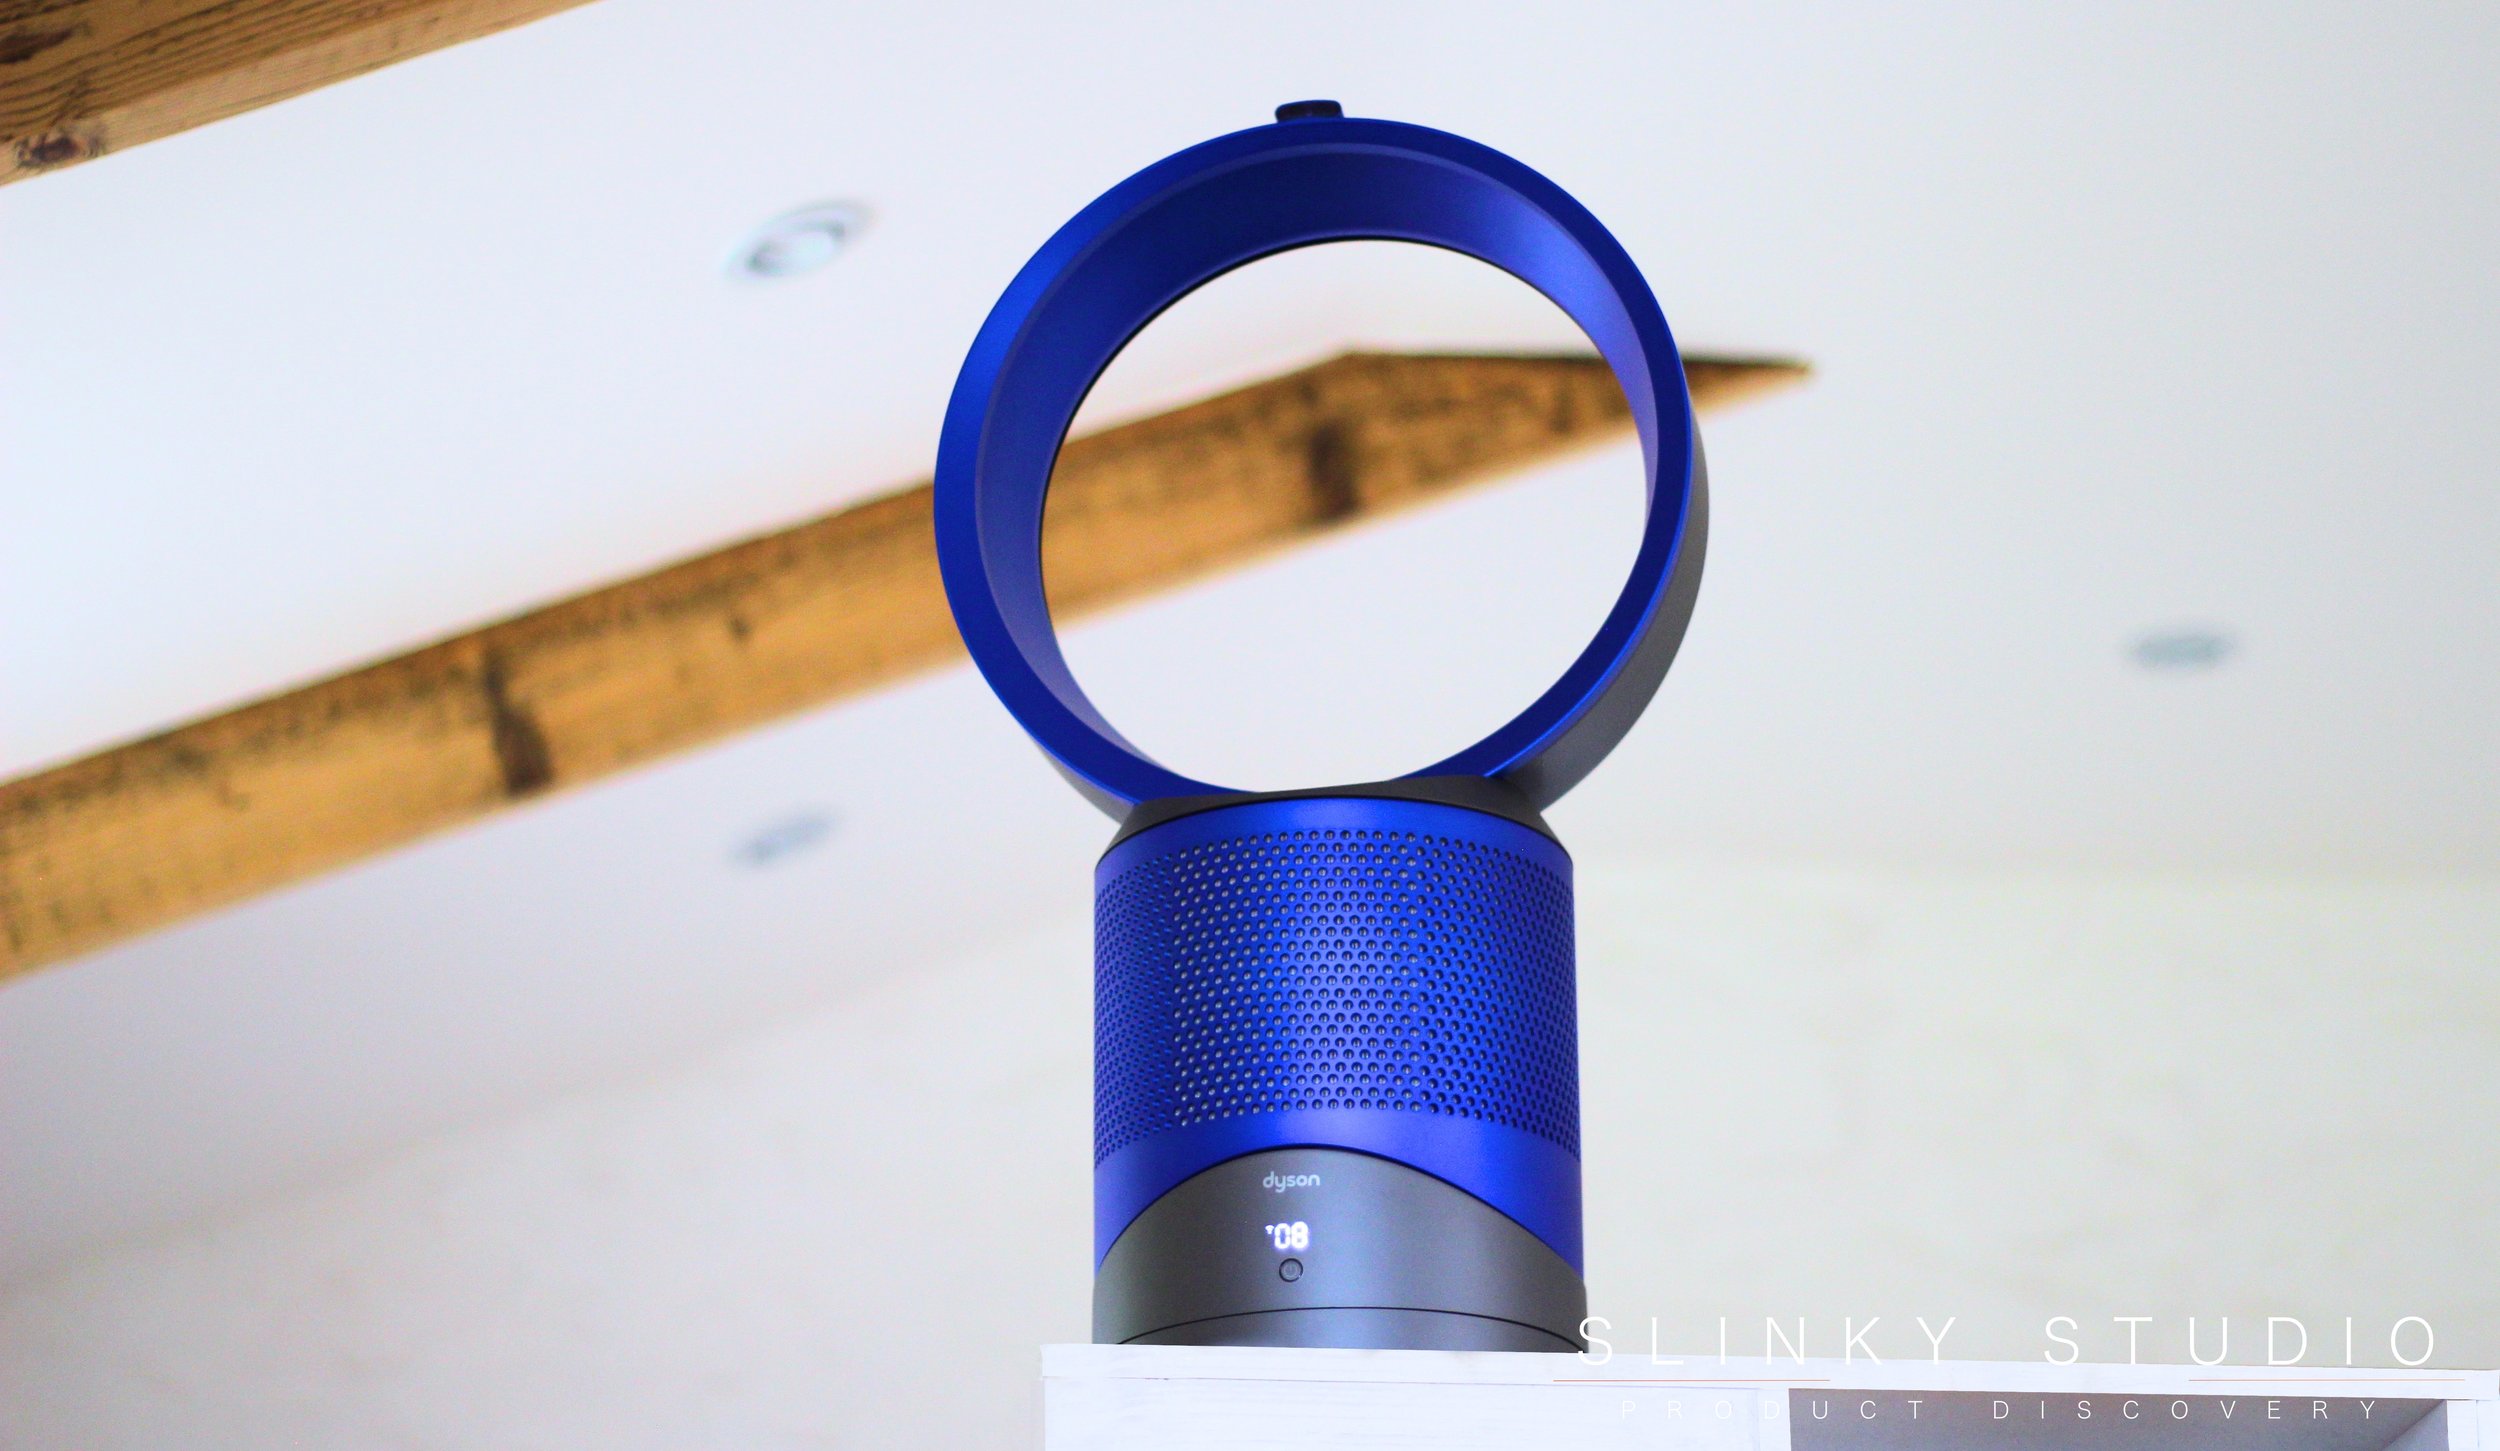 Instant Vortex Plus Dual Drawer Air Fryer Review - Slinky Studio